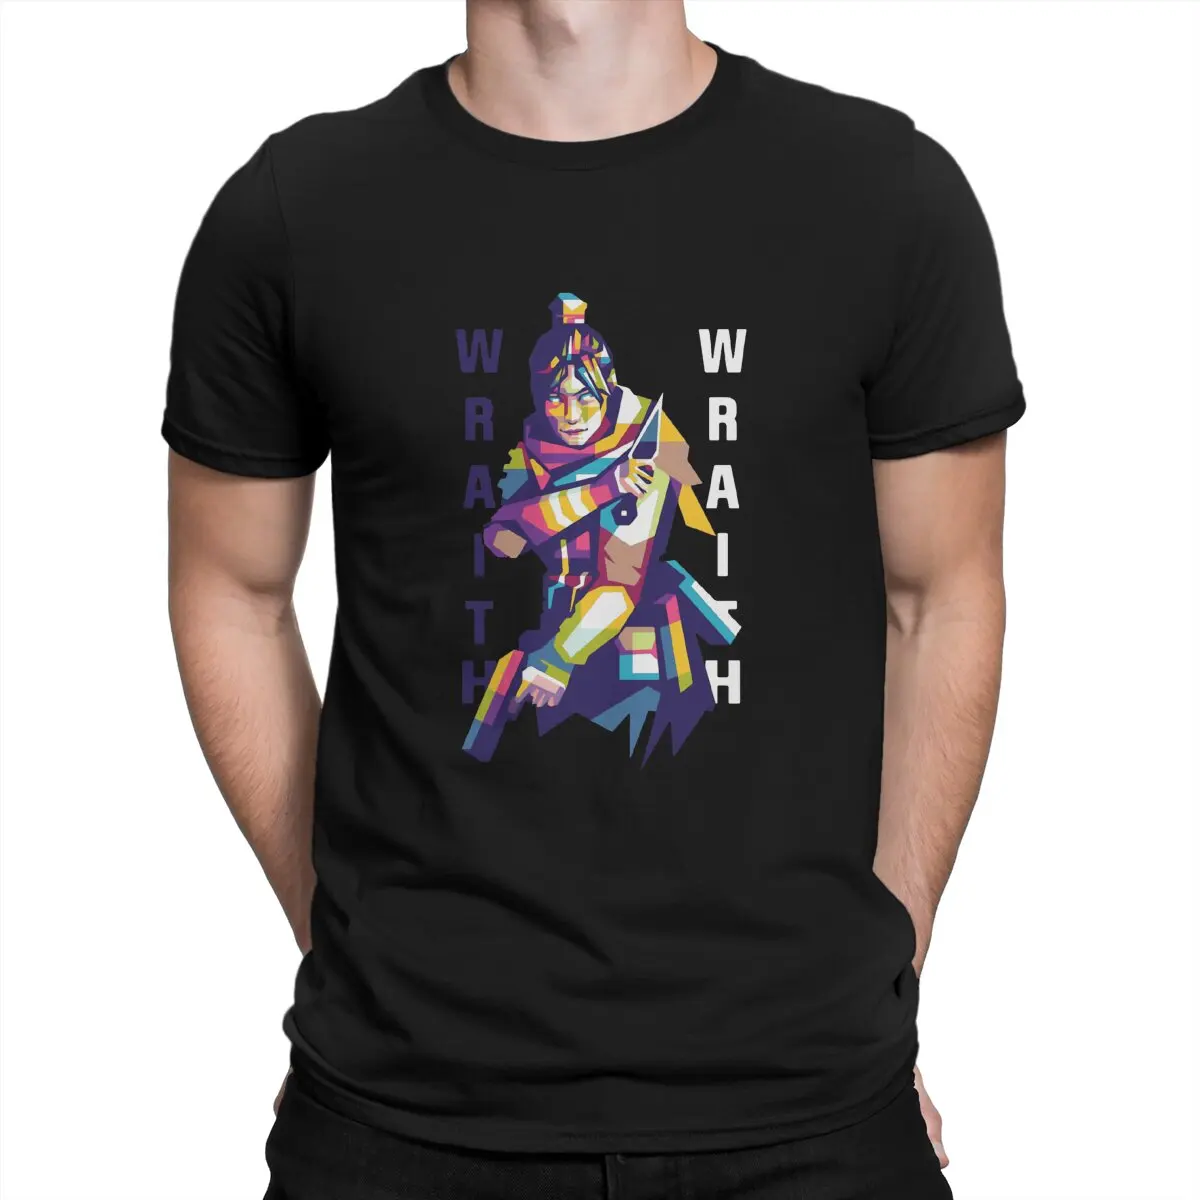 Мужская футболка Wraith Geometric art Apex Legends С круглым вырезом, Тканевая Футболка, Забавная Идея Подарка Высокого Качества